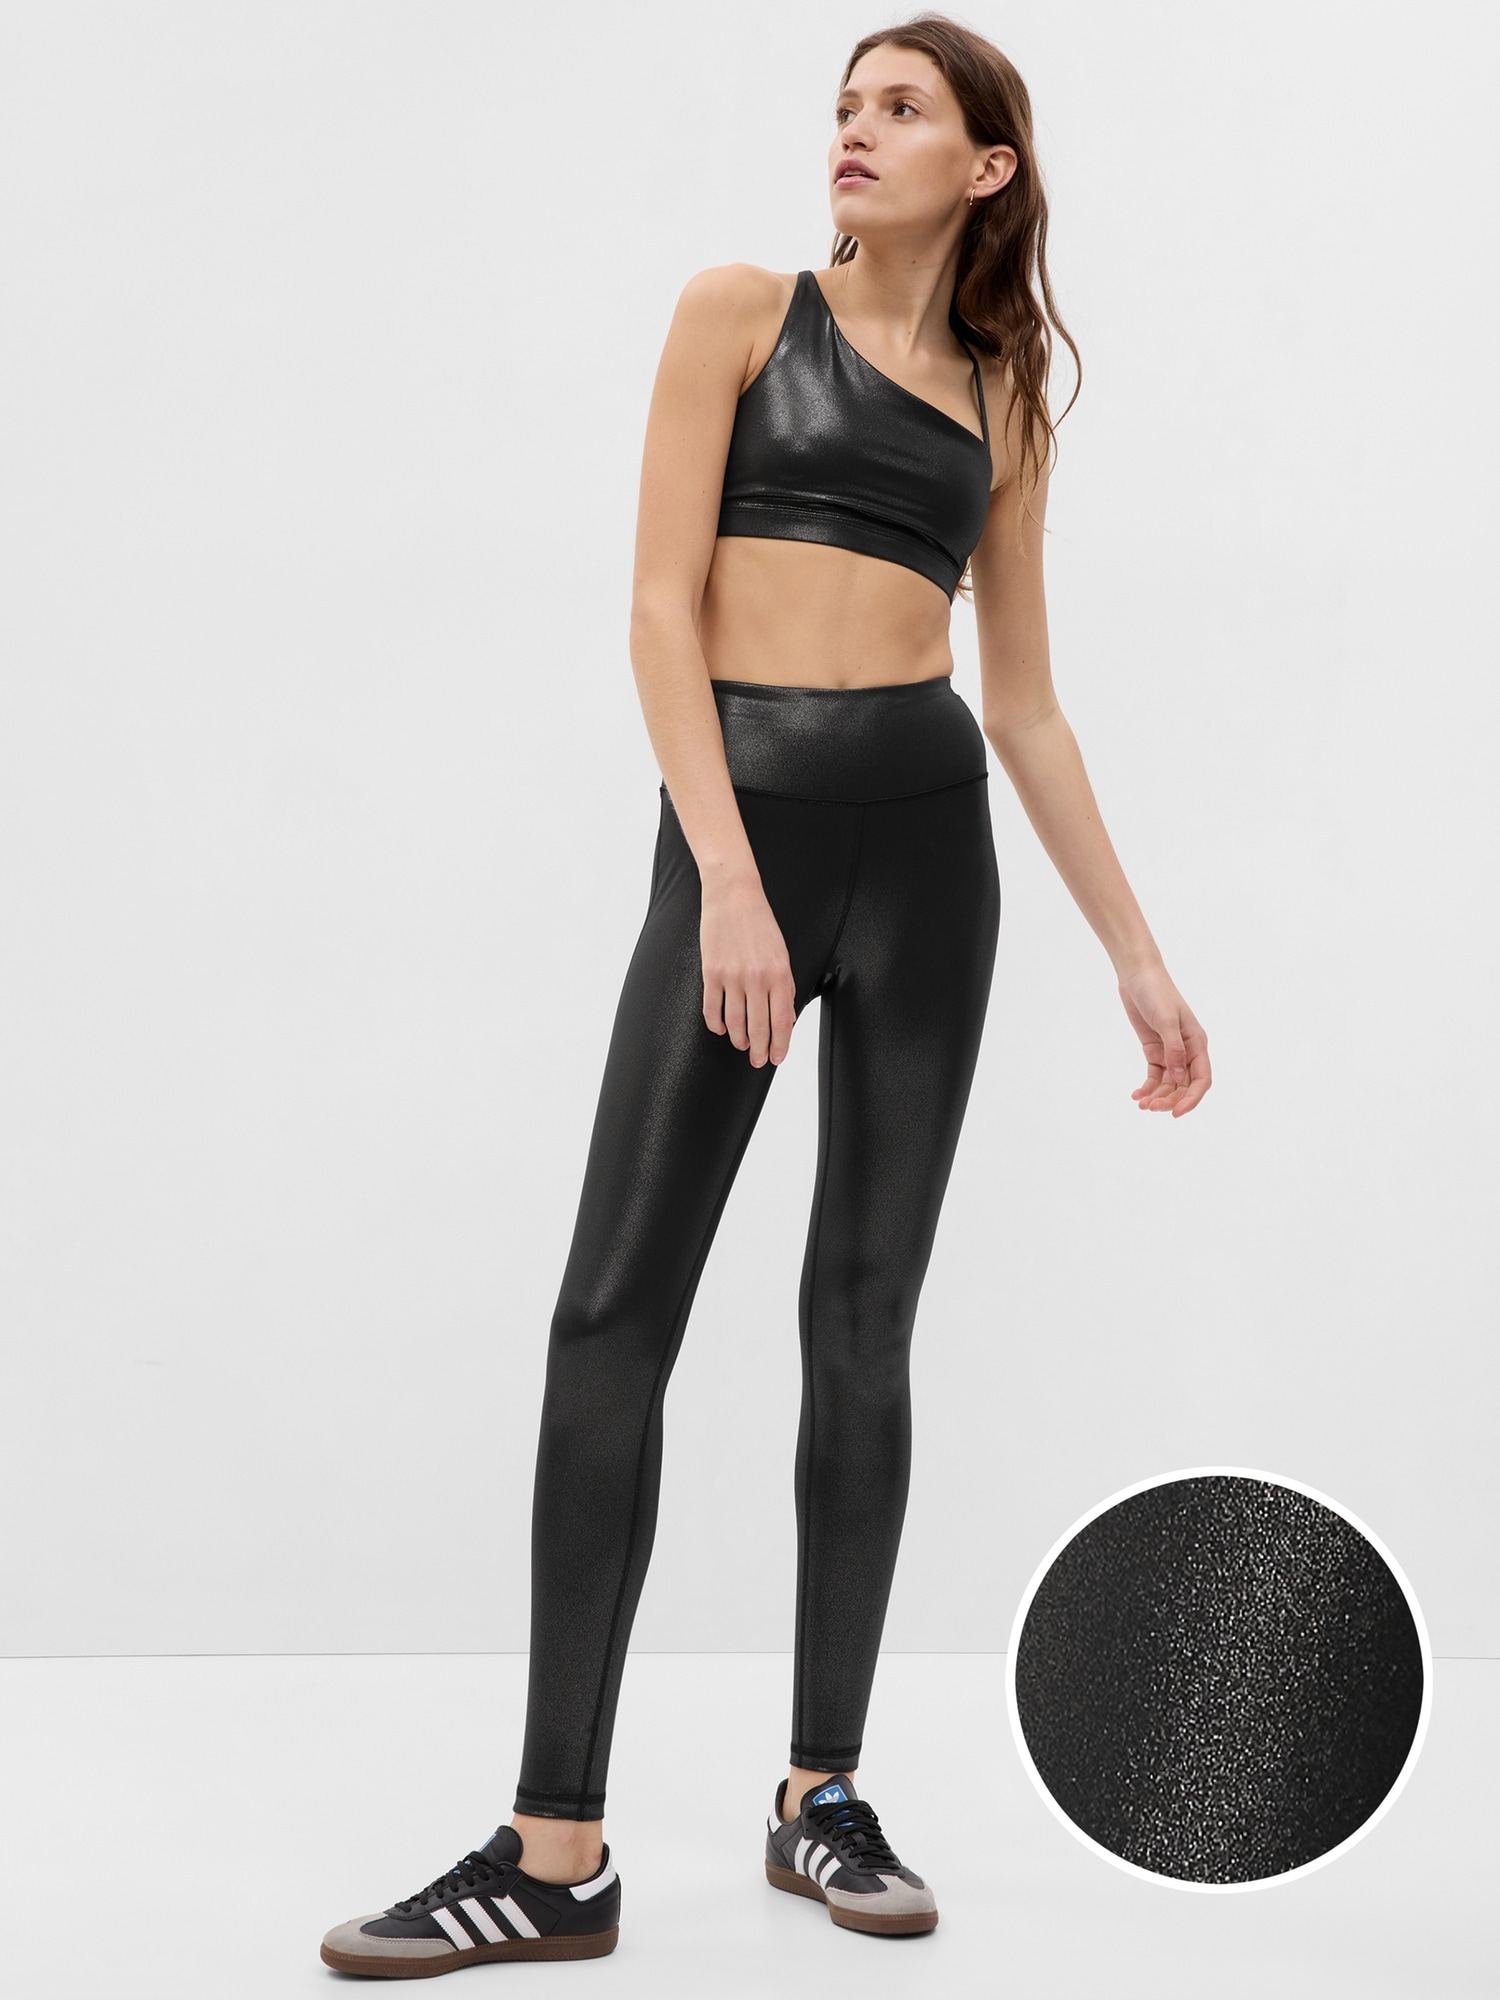 Buy Women's Beautiful Skinny Fit Shiny legging (Black, 30) at